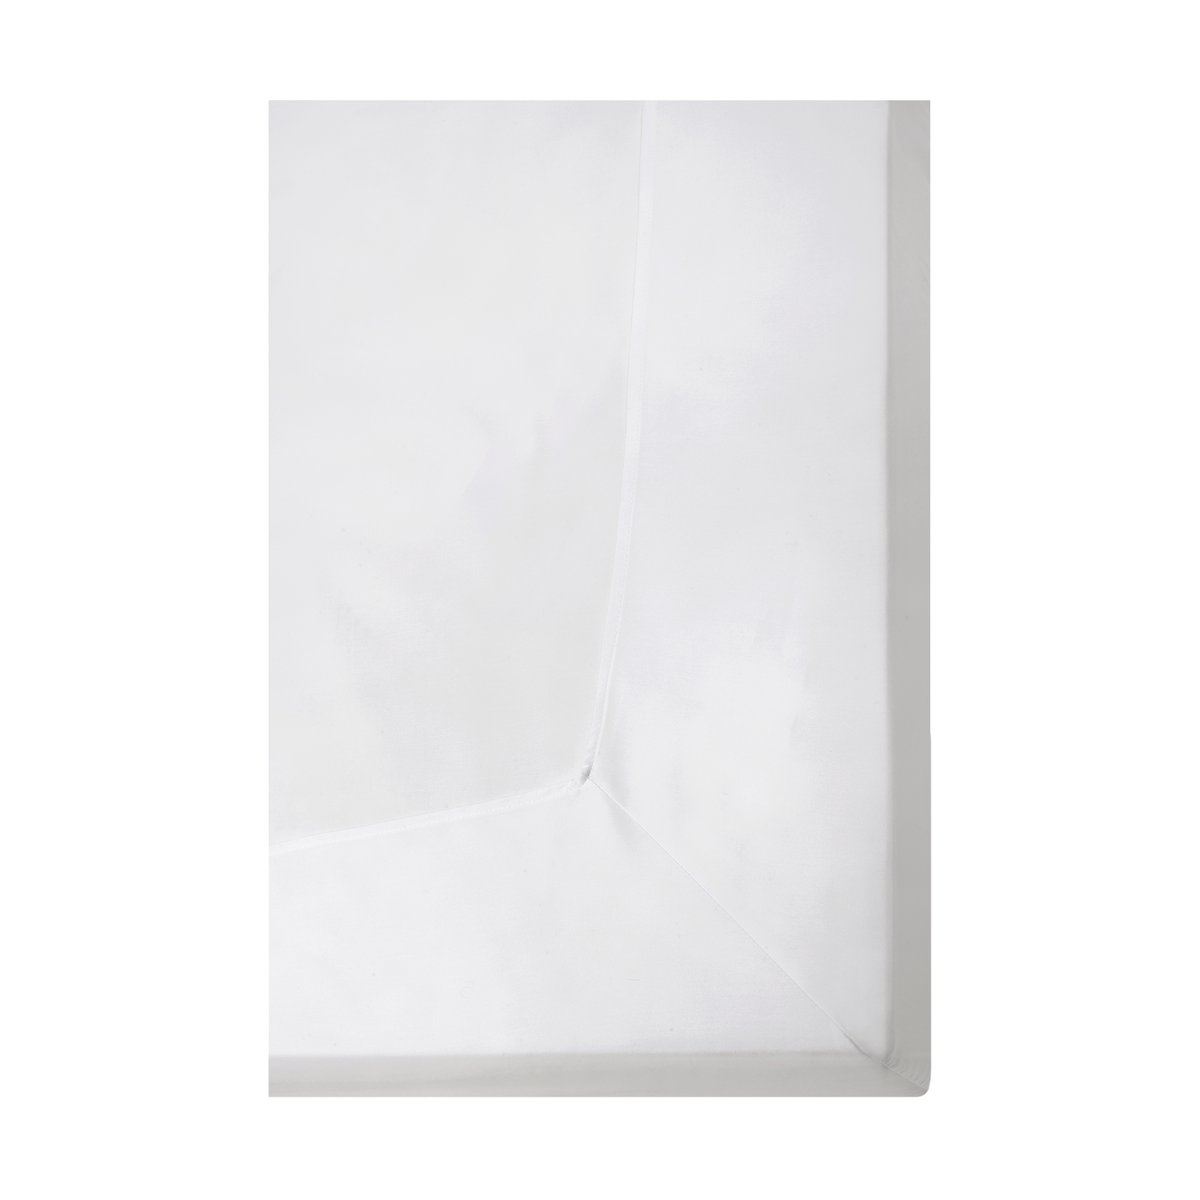 Himla Soul omslag genaaid hoeslaken 105x200 White